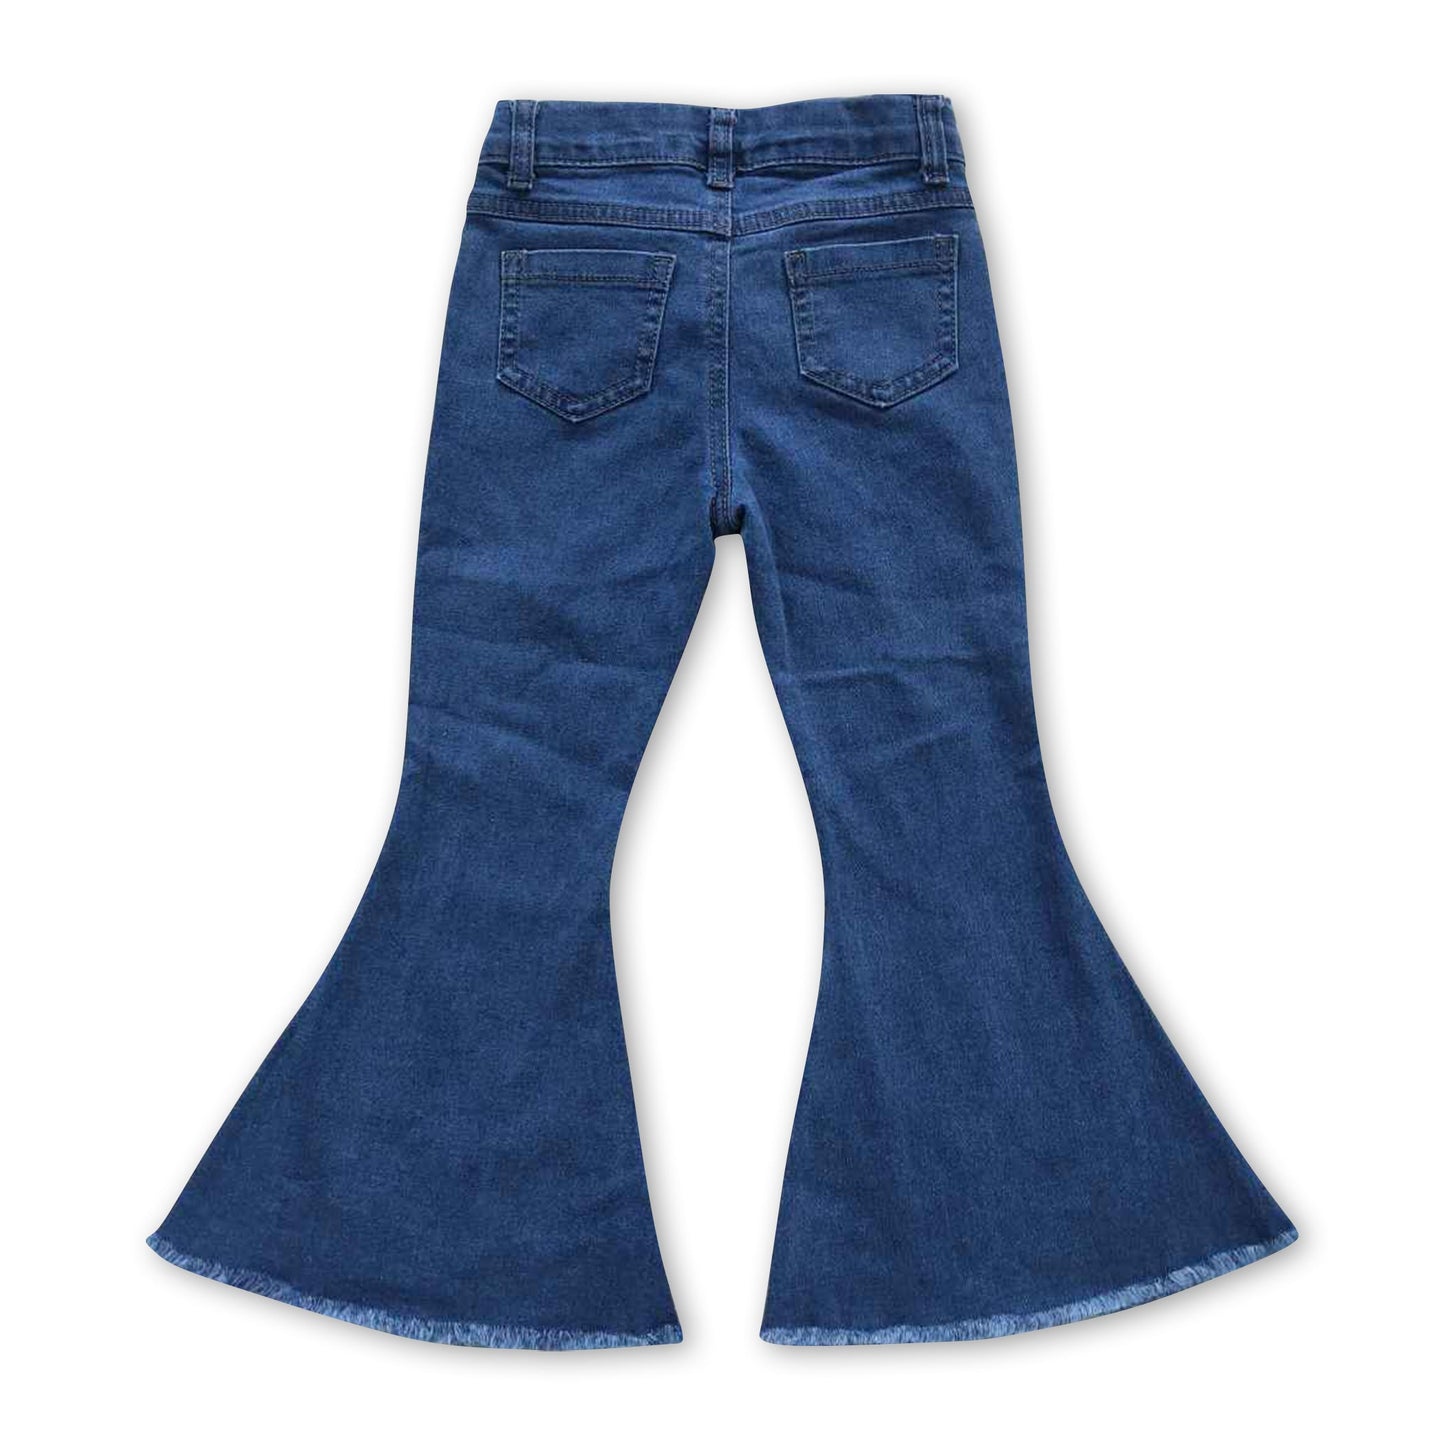 Washed stars denim pants kids girls jeans